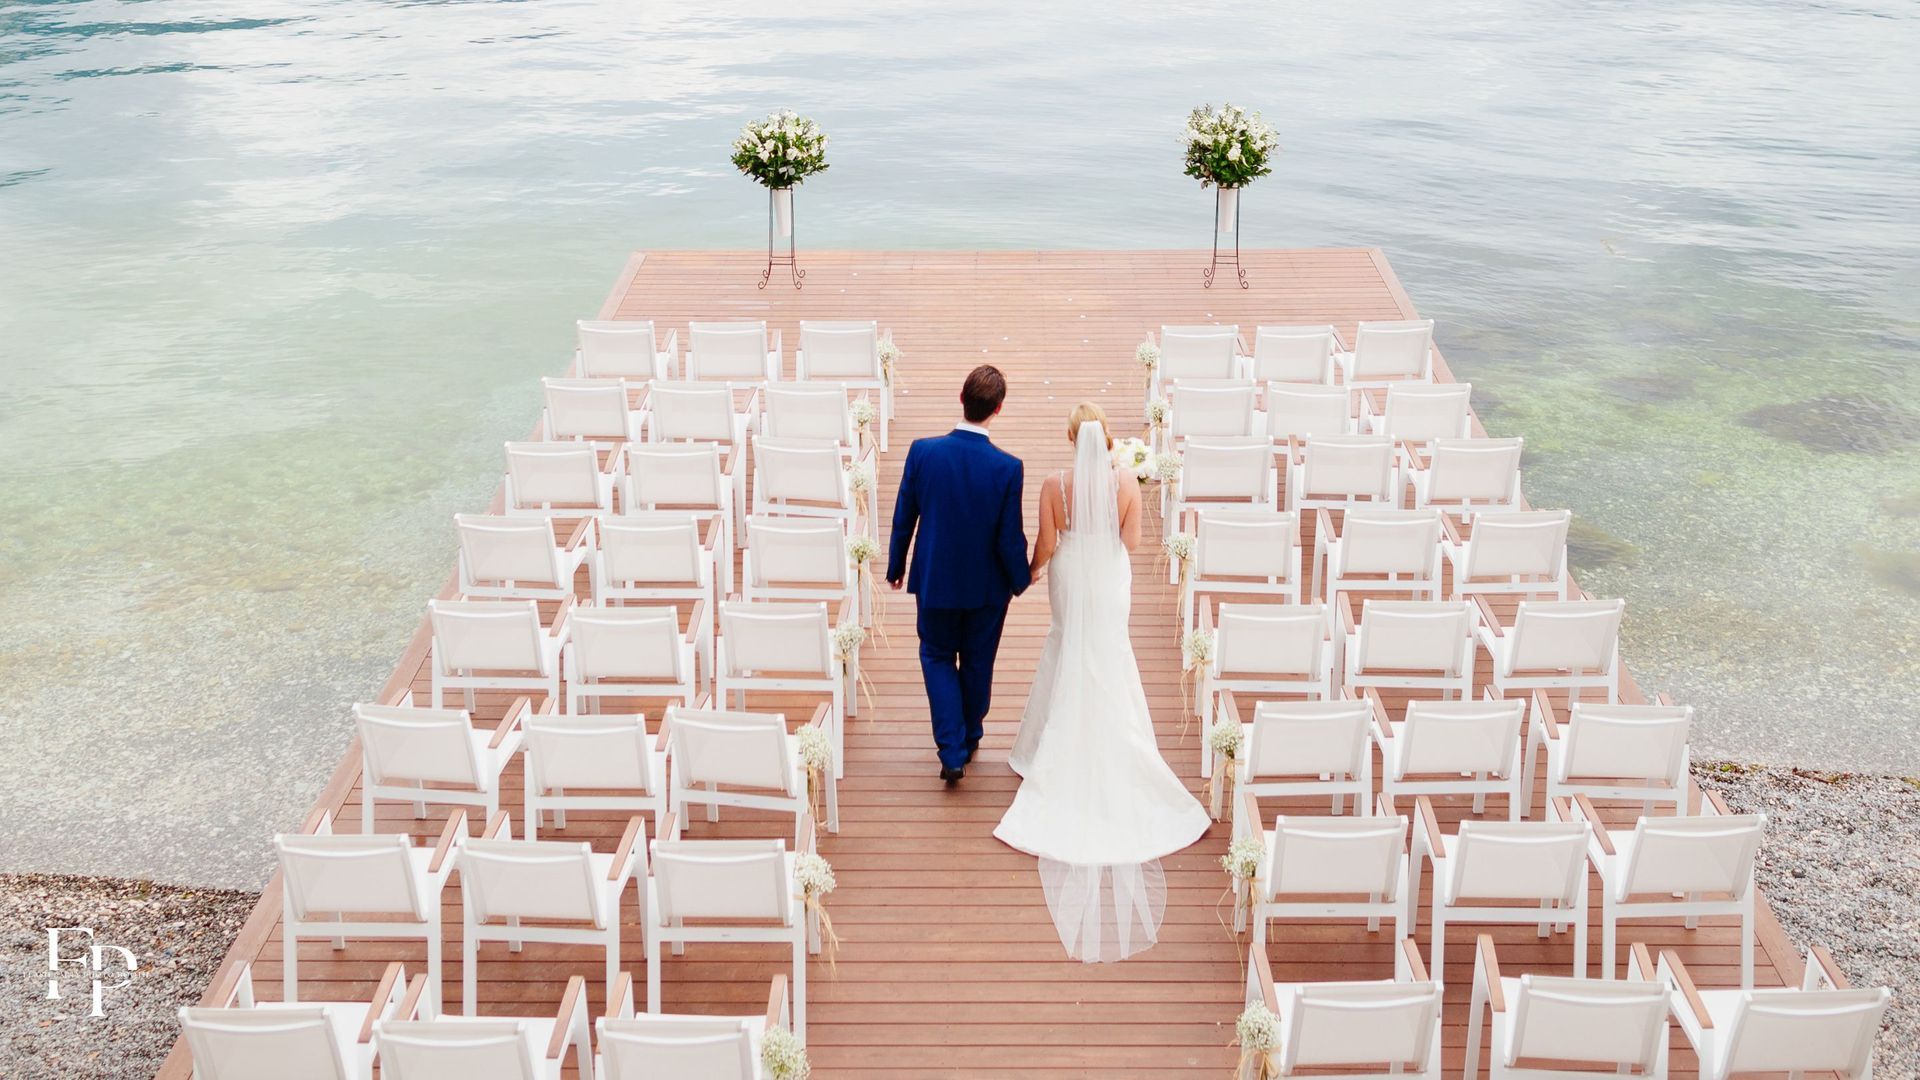 Bride and groom take their first steps down the aisle at their Sugar Land destination wedding.